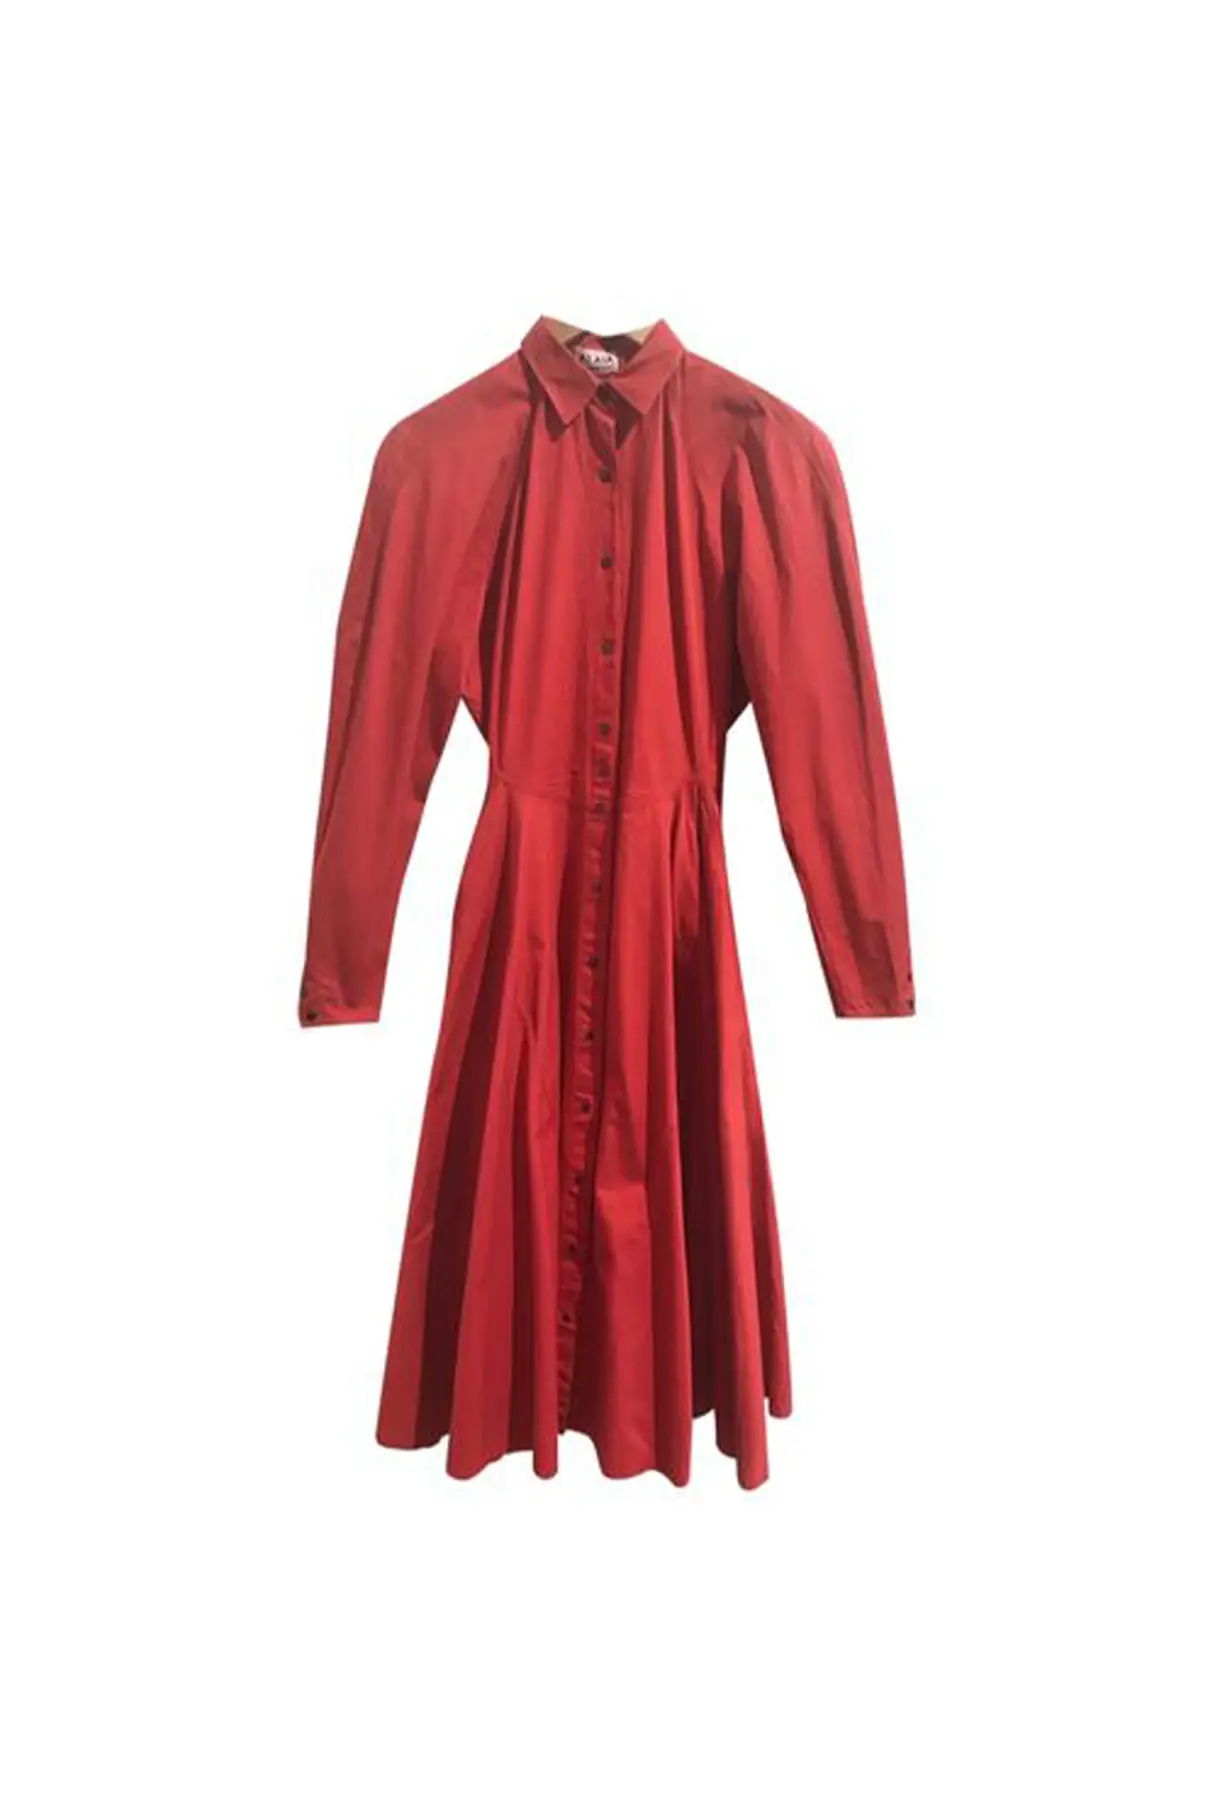 red-cotton-alaia-dress.jpg